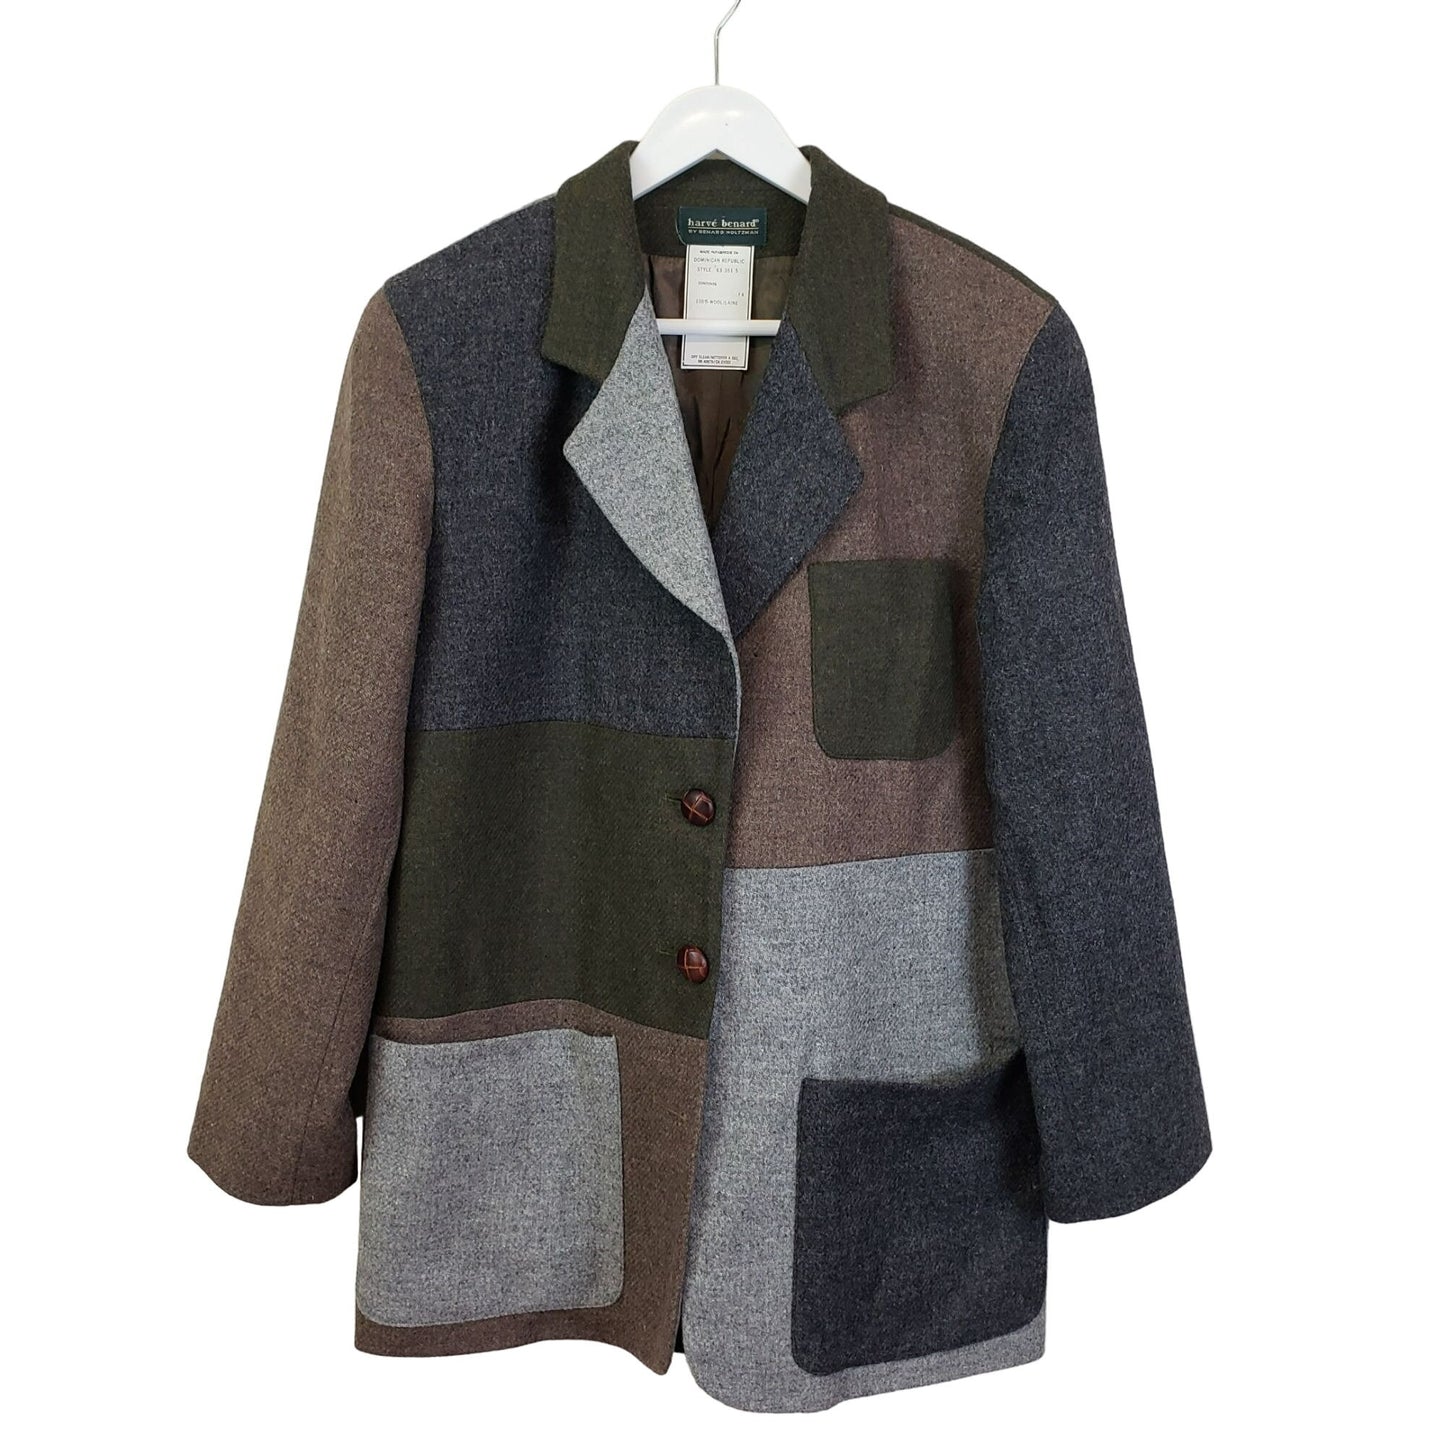 Harve Benard 100% Wool Colorblock Three Button Blazer Jacket Size 6